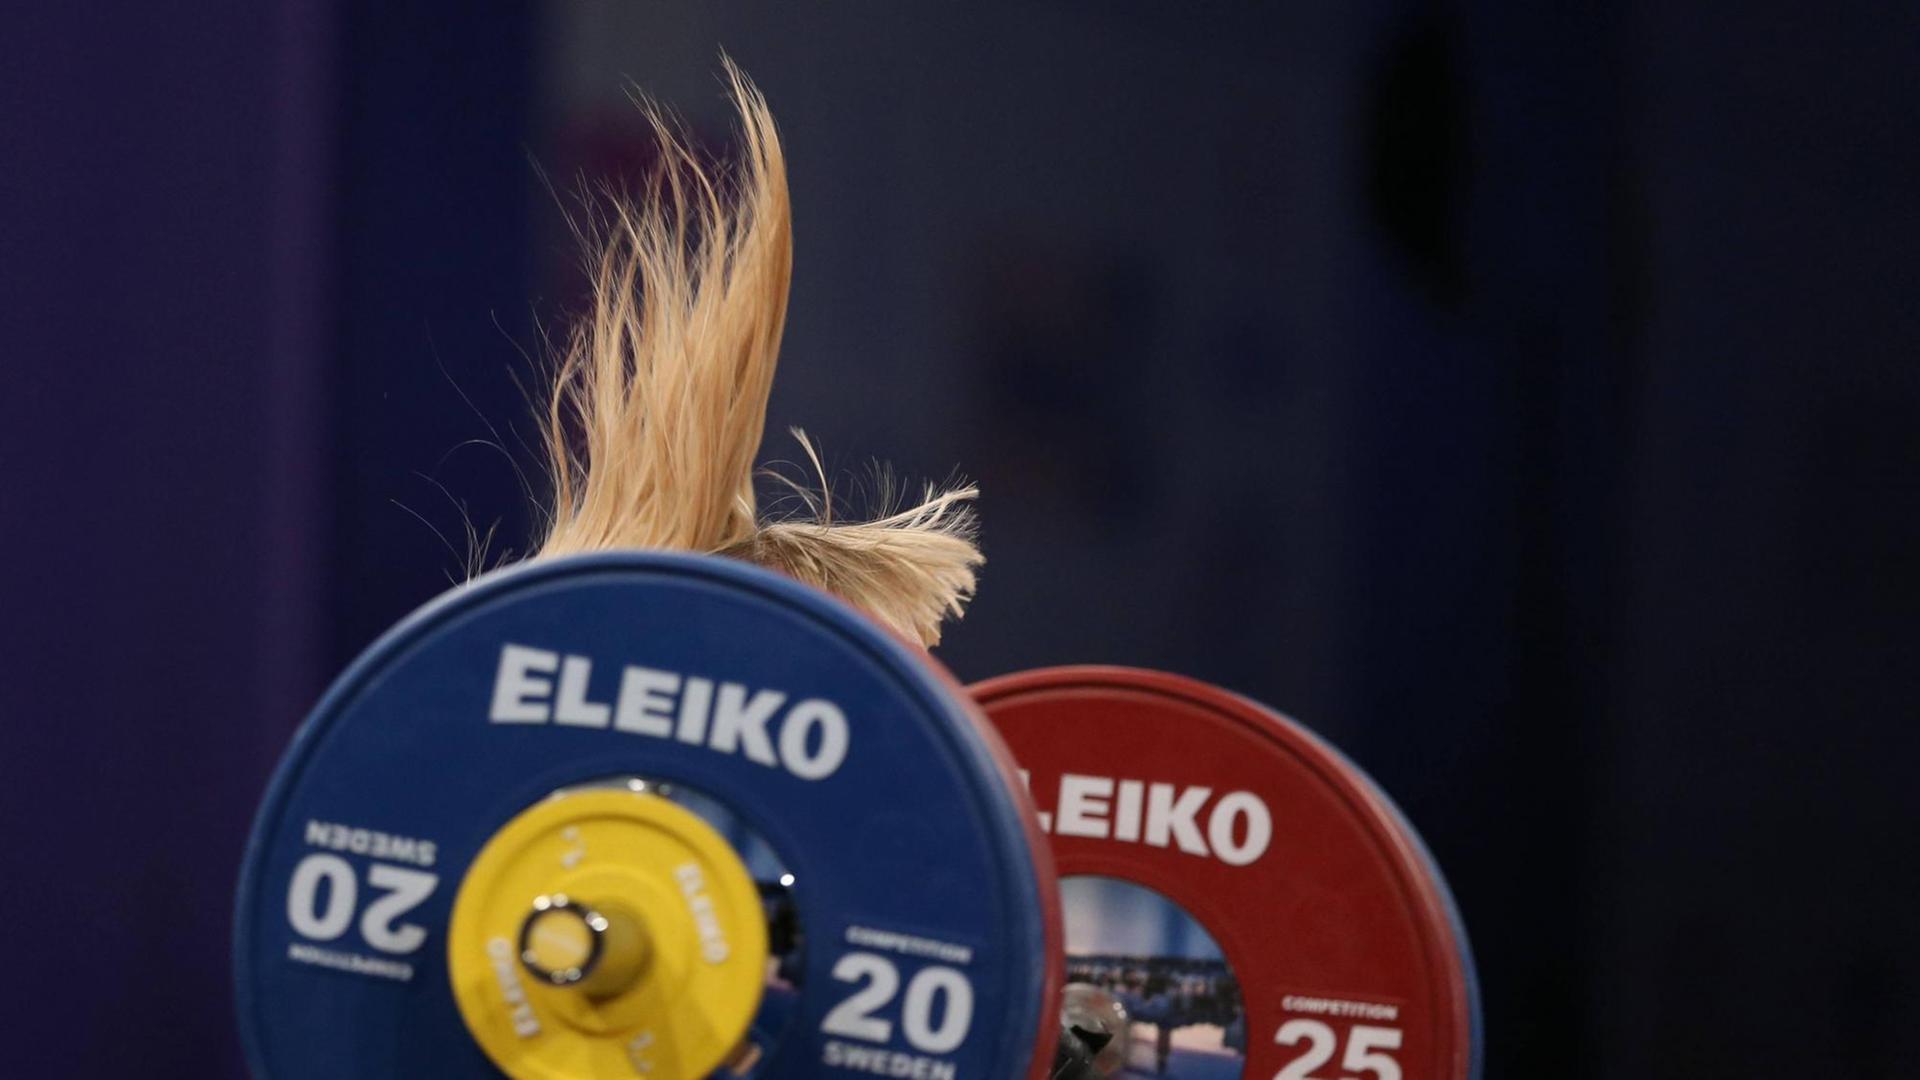 Typical: Katarzyna Kraska, POL, during 2017 European Weightlifting Championships -58kg in Split; 03/04/2017 - Typical Katarzyna Kraska POL during 2017 European Weightlifting Championships 58kg in Split 03 04 2017